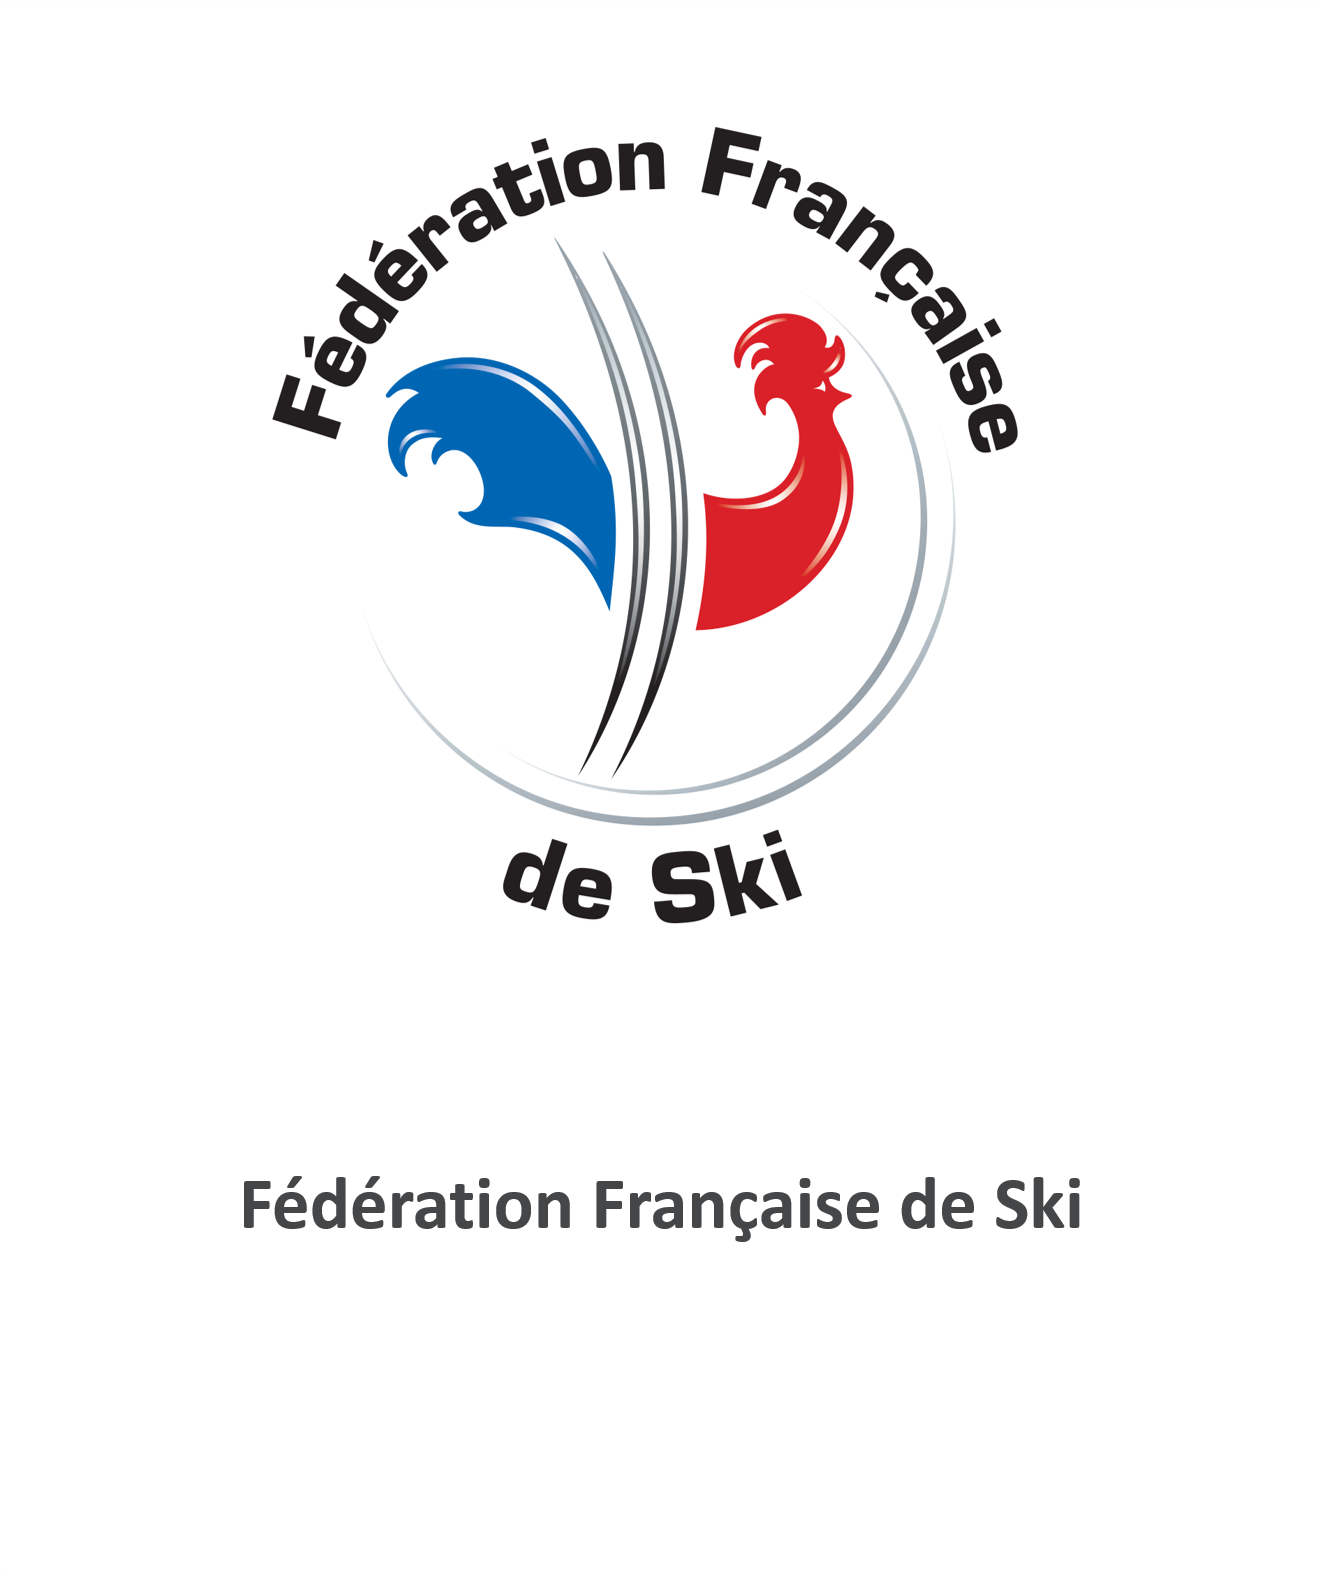 https://mclloyd.com/wp-content/uploads/2021/05/Federation-Francasie-de-Ski-1.png